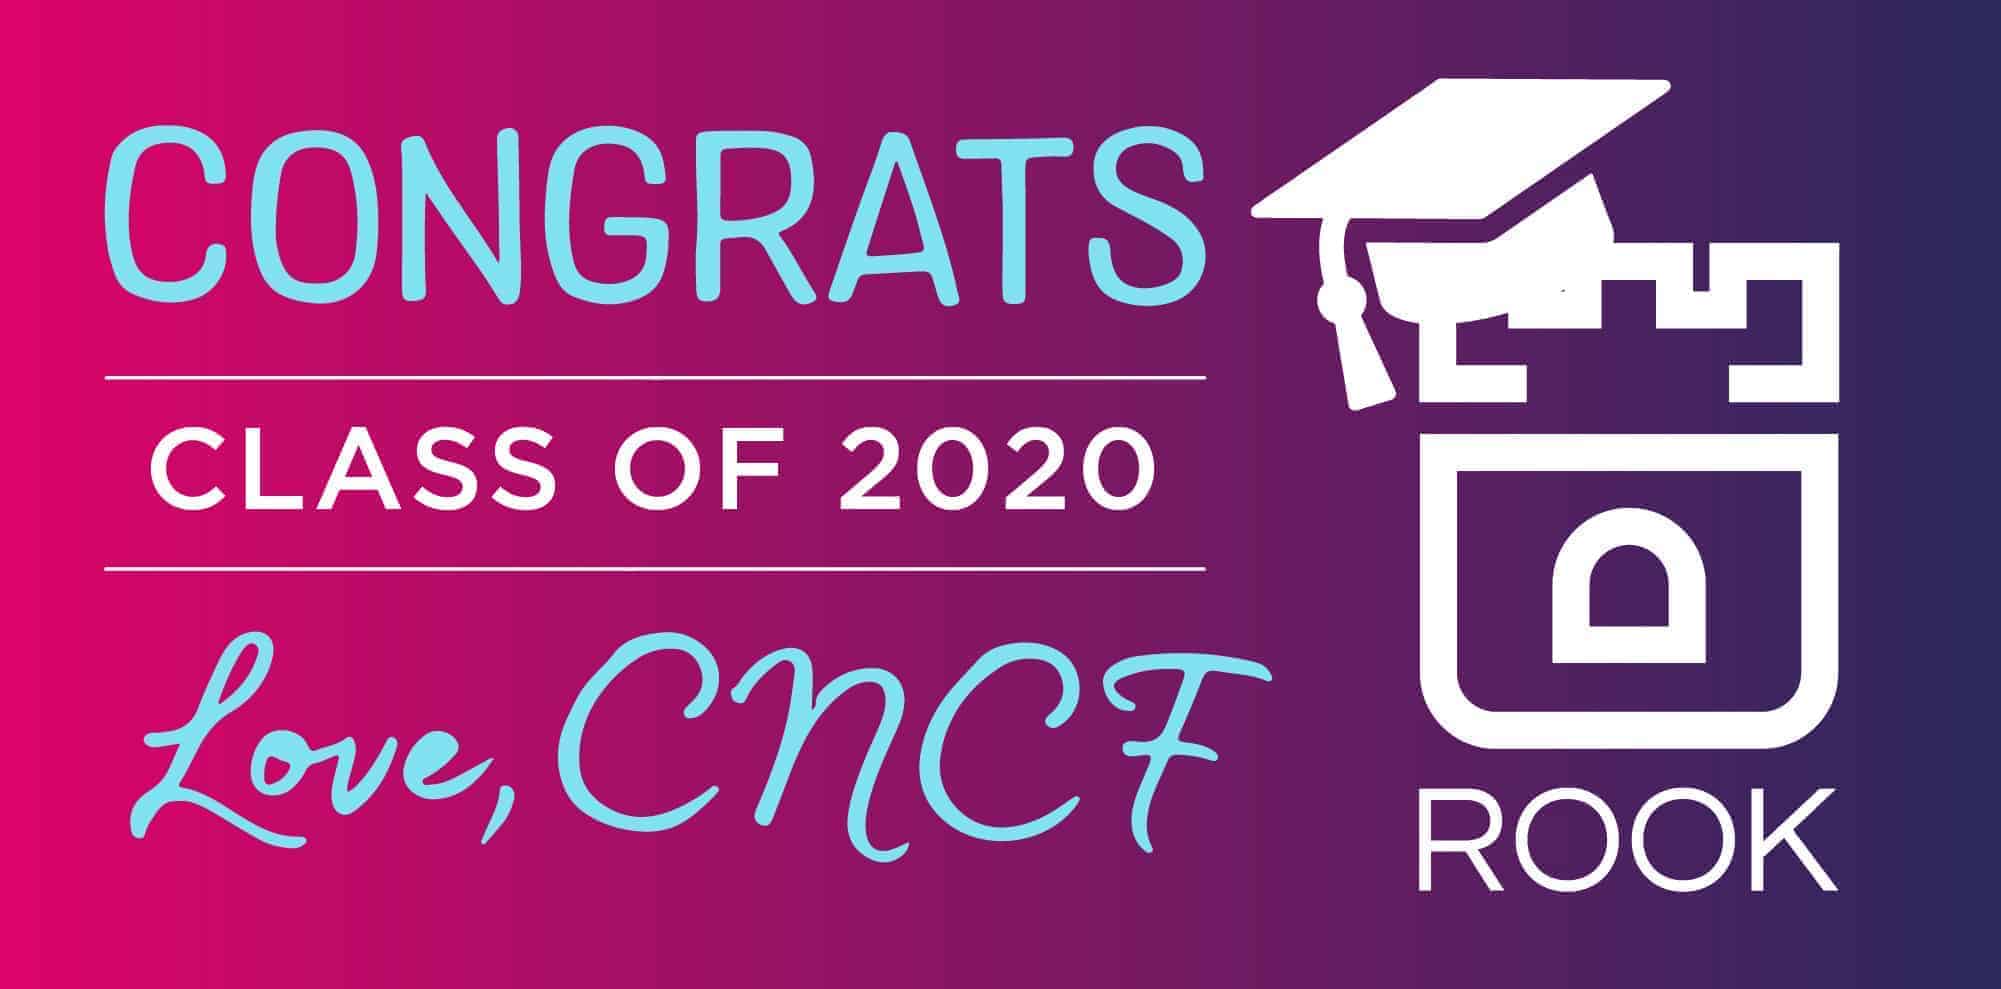 CNCF congratulates graduation of Rook class of 2020 